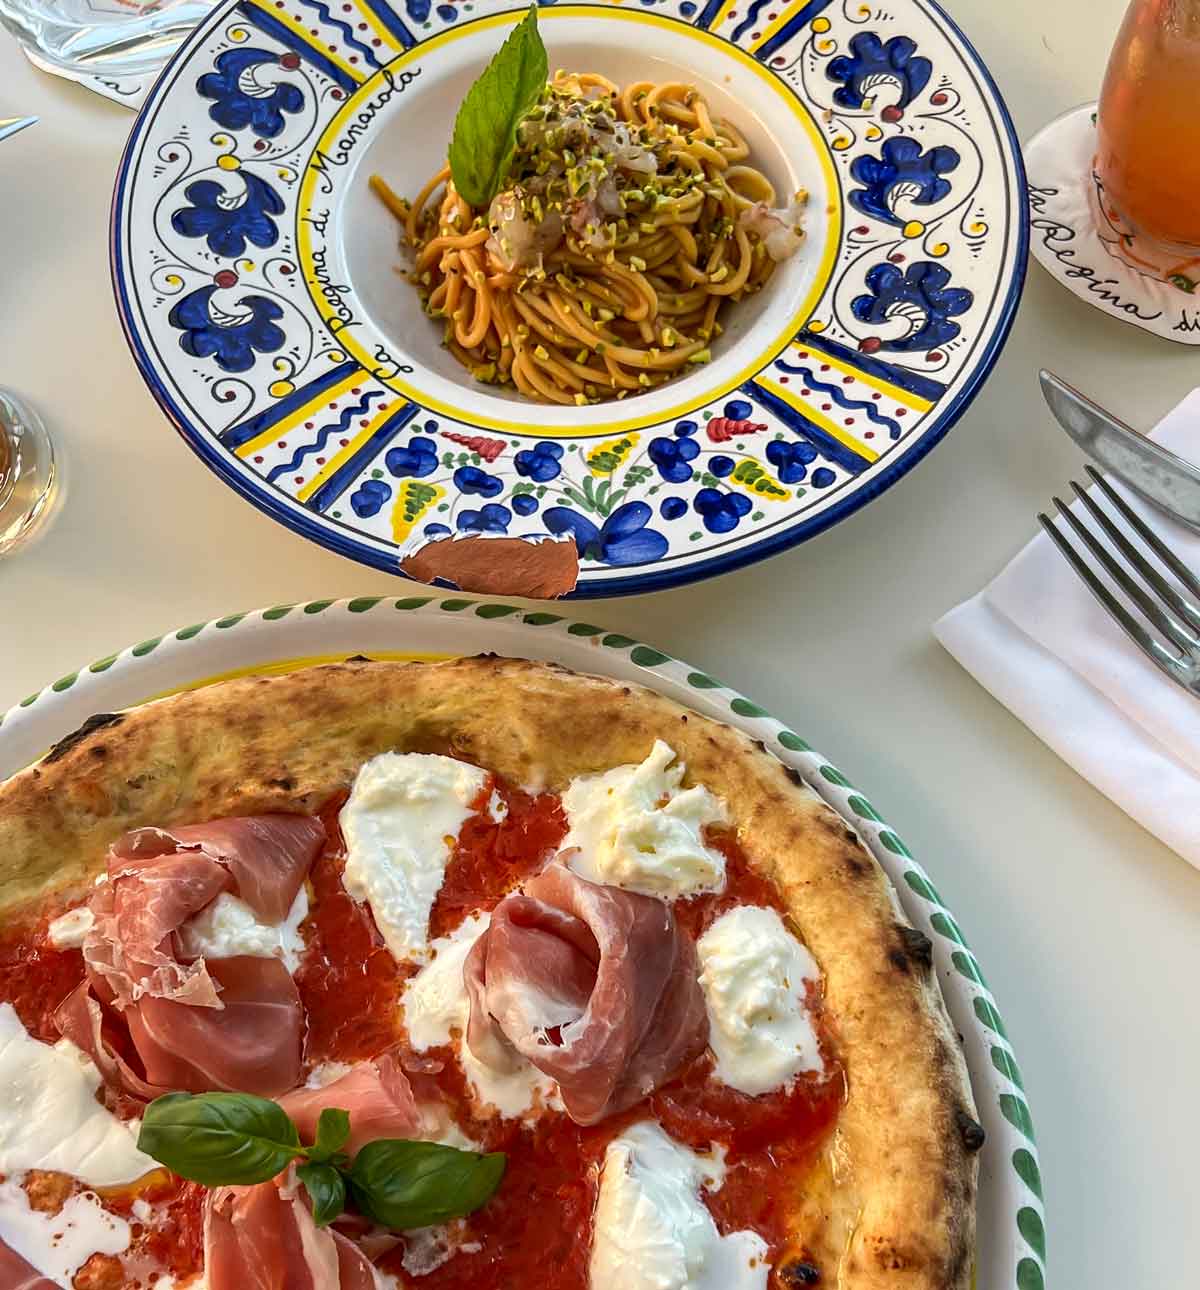 Tagliolini pasta dish and pizza with ham and cheese